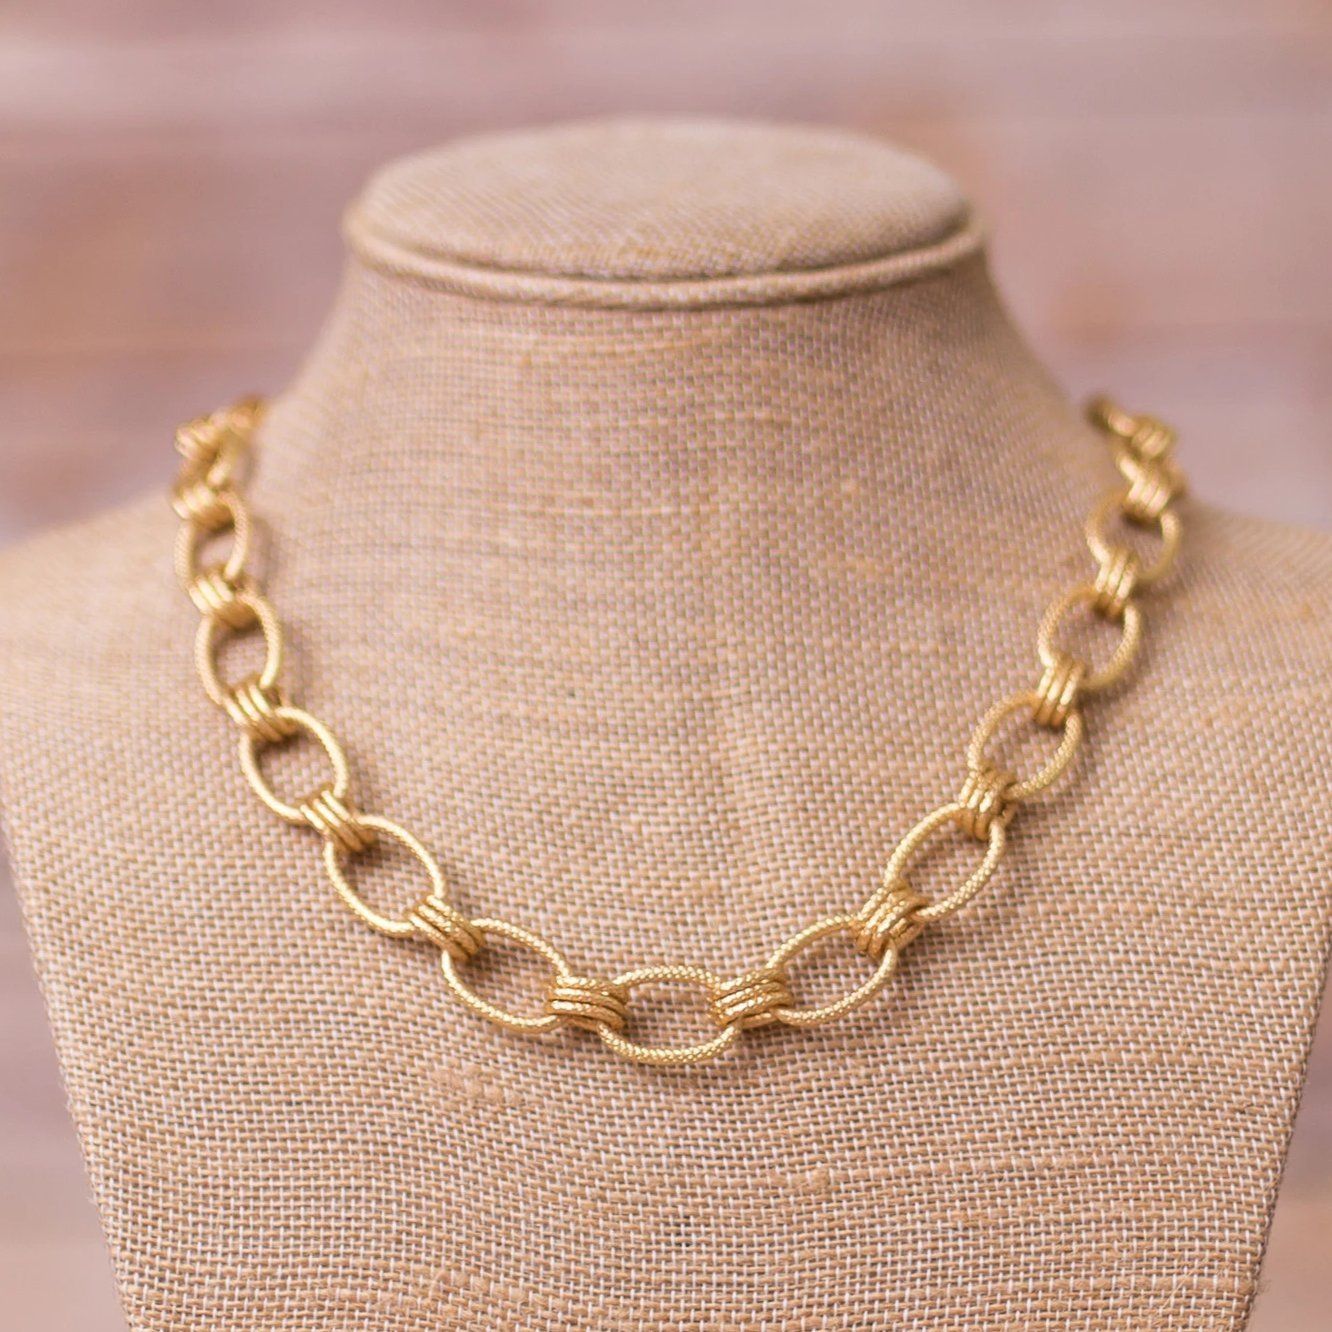 Gold Statement Chain Necklace - handmade